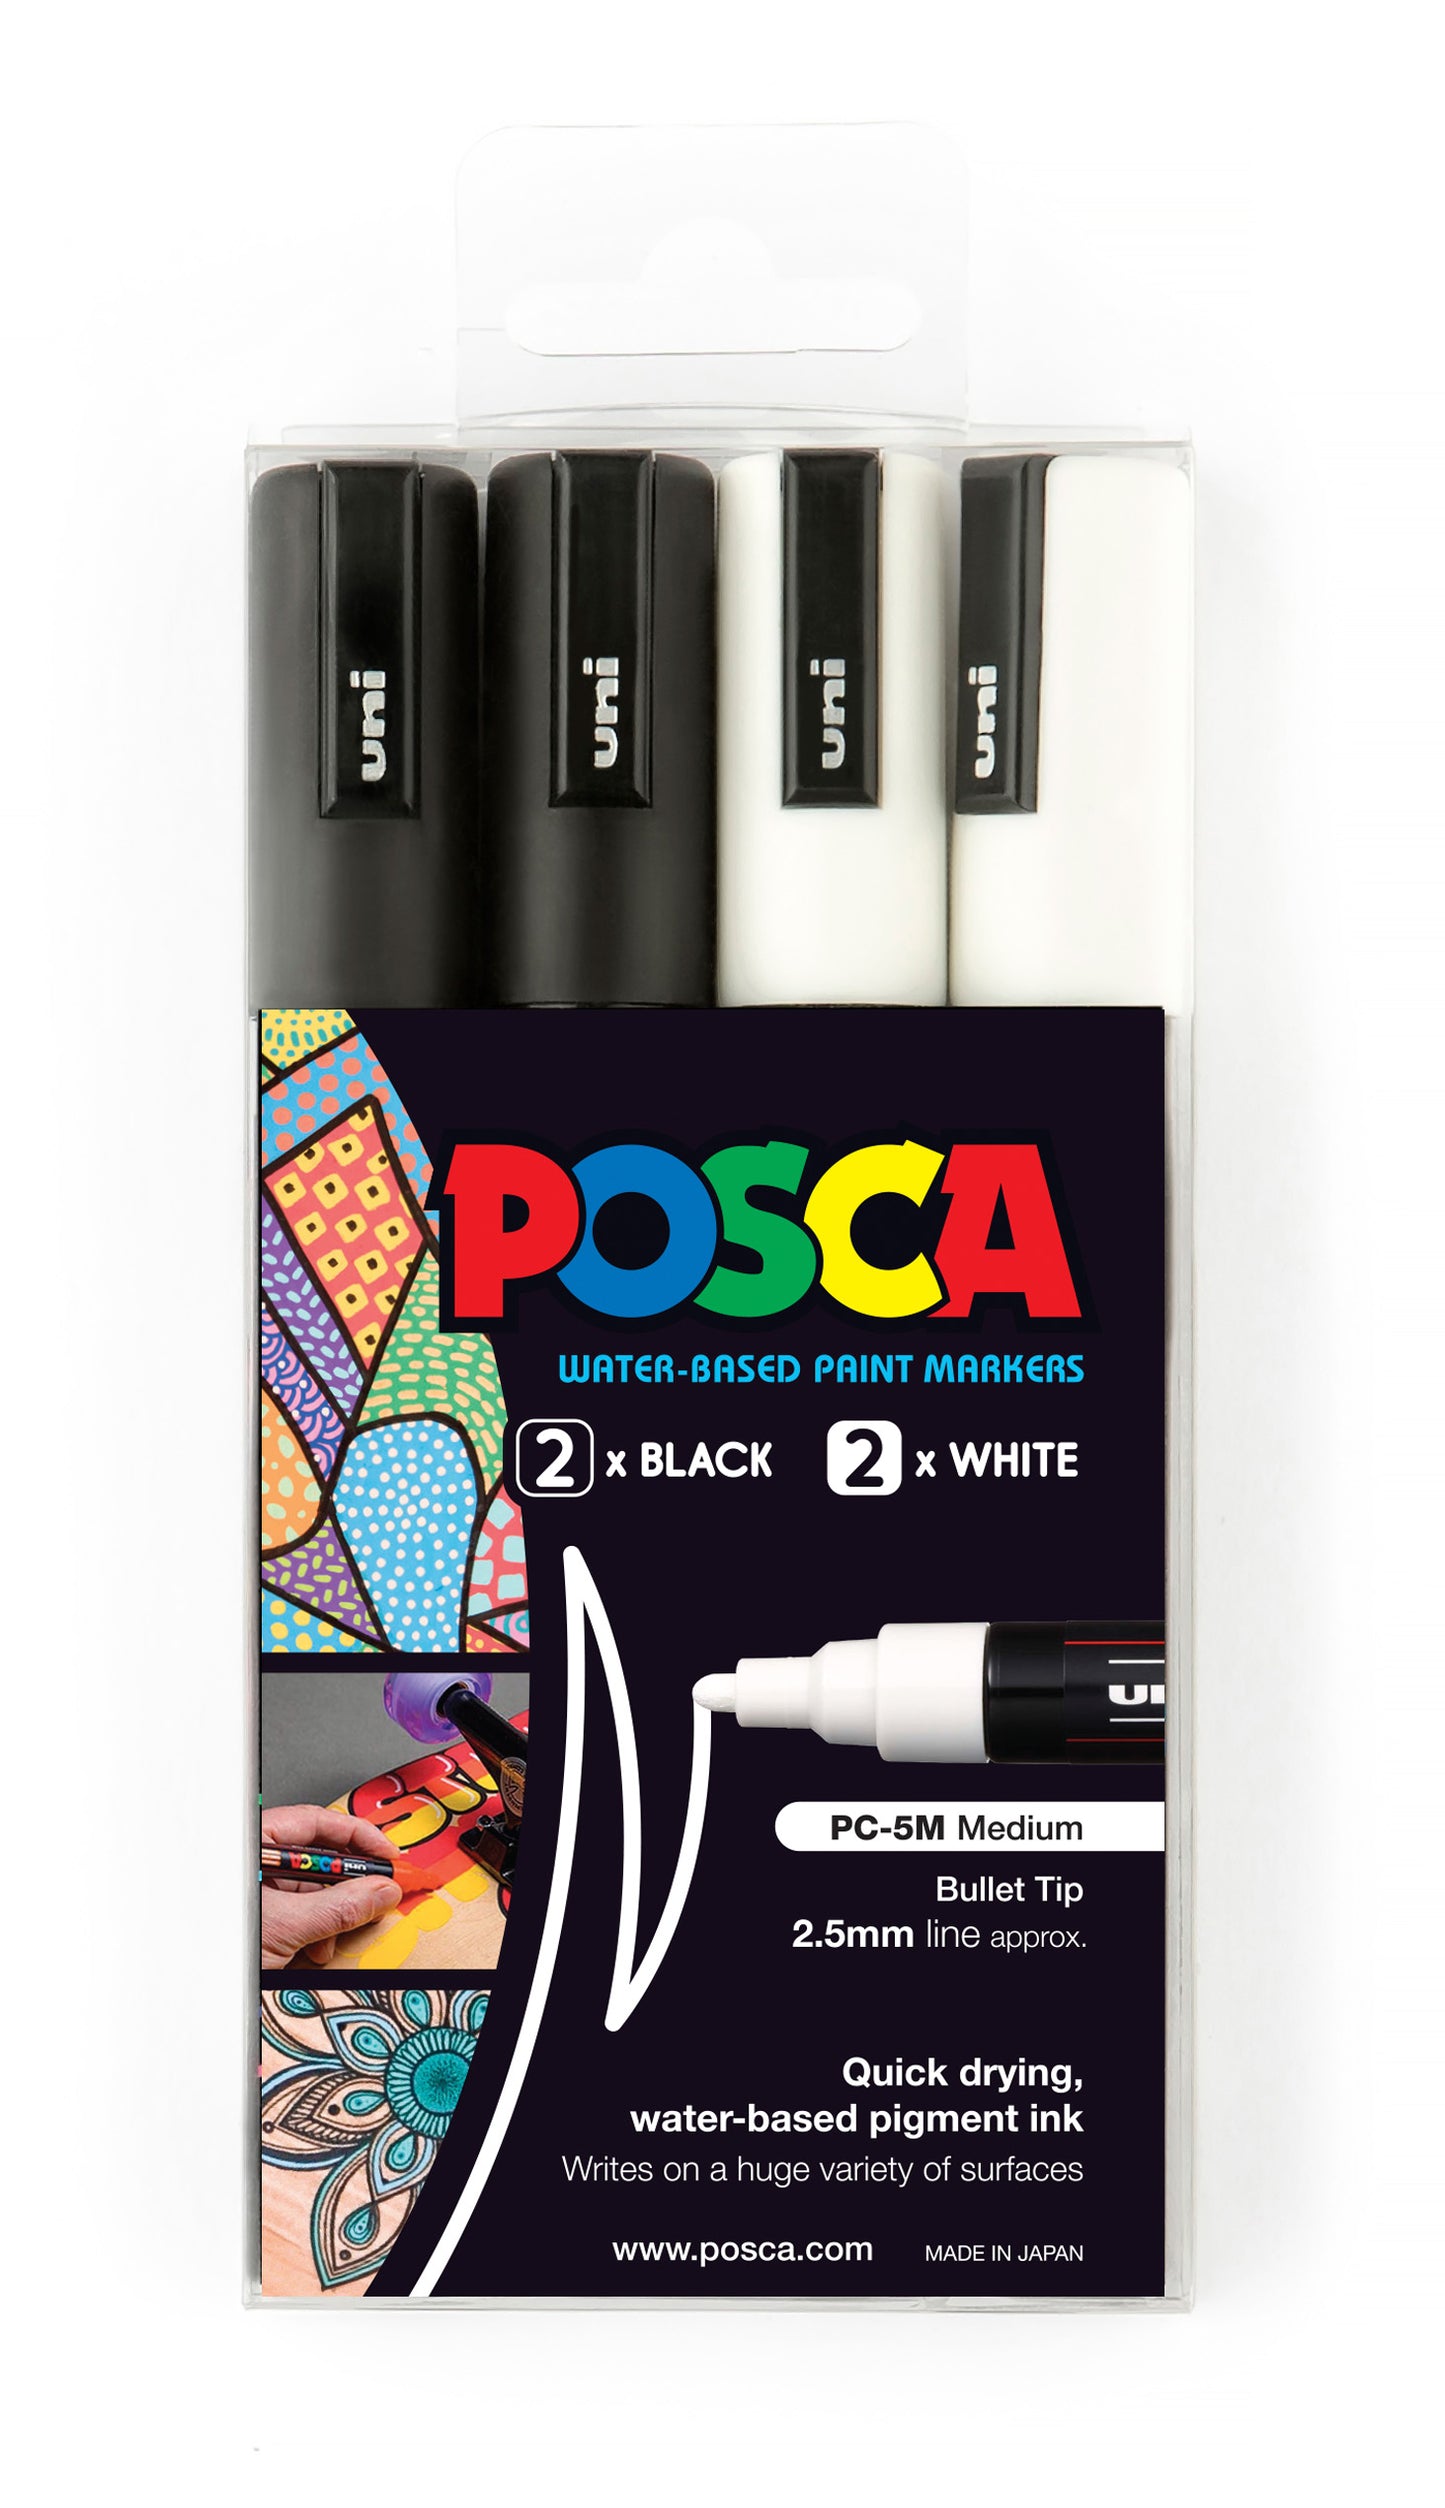 Clarkes The Art Shop, Brighton on Instagram: Posca pens on black